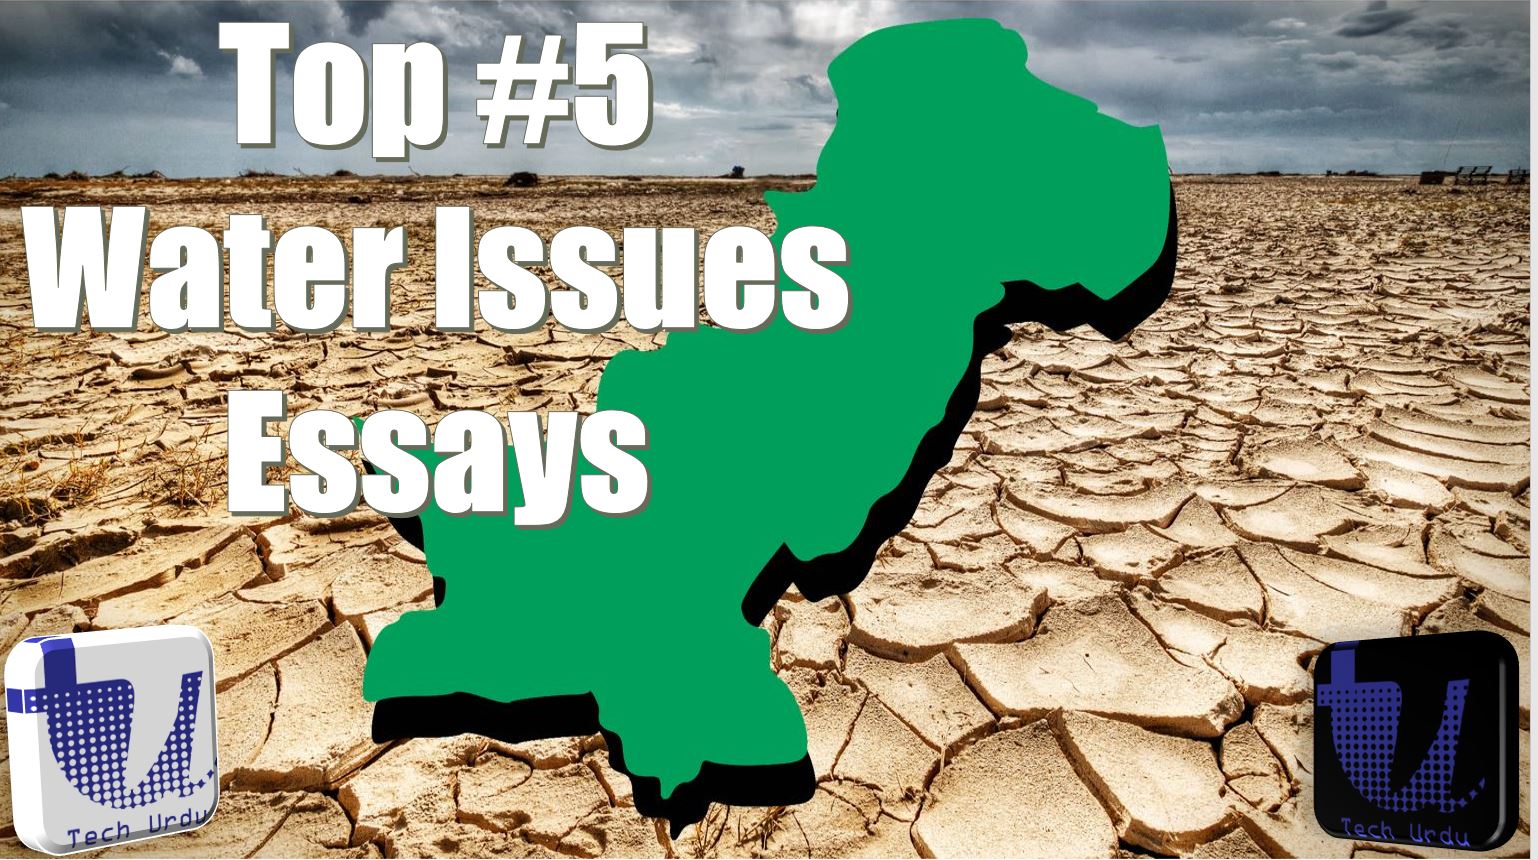 essay on water crisis in pakistan